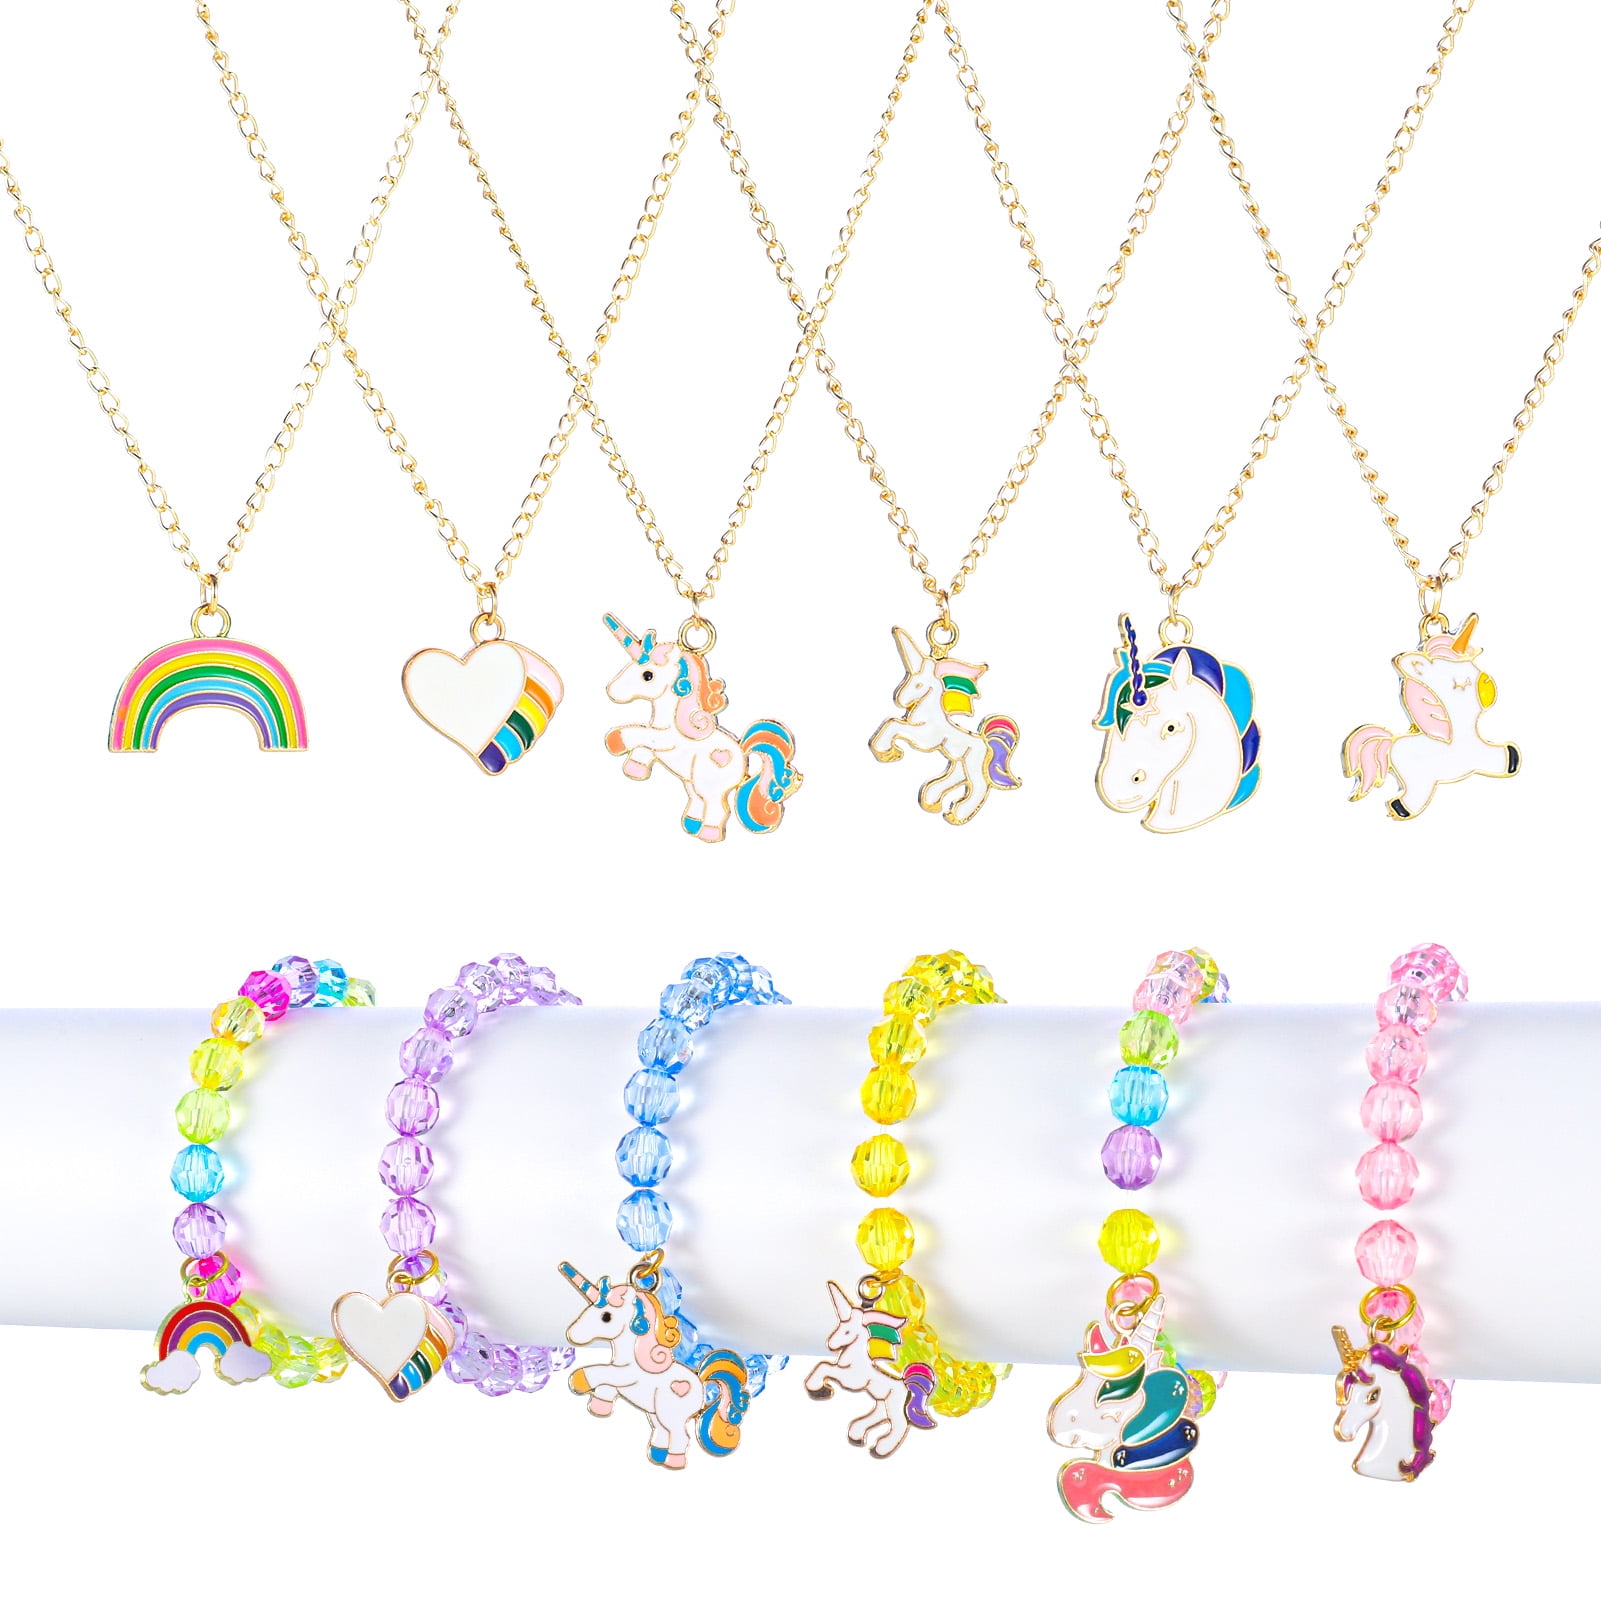 24 Pcs Little Girl Jewelry Set Kids Unicorn Necklace Cute Woven Bracelet Ring for Girls Pretend Dress Up Party Favor (Cute Style)